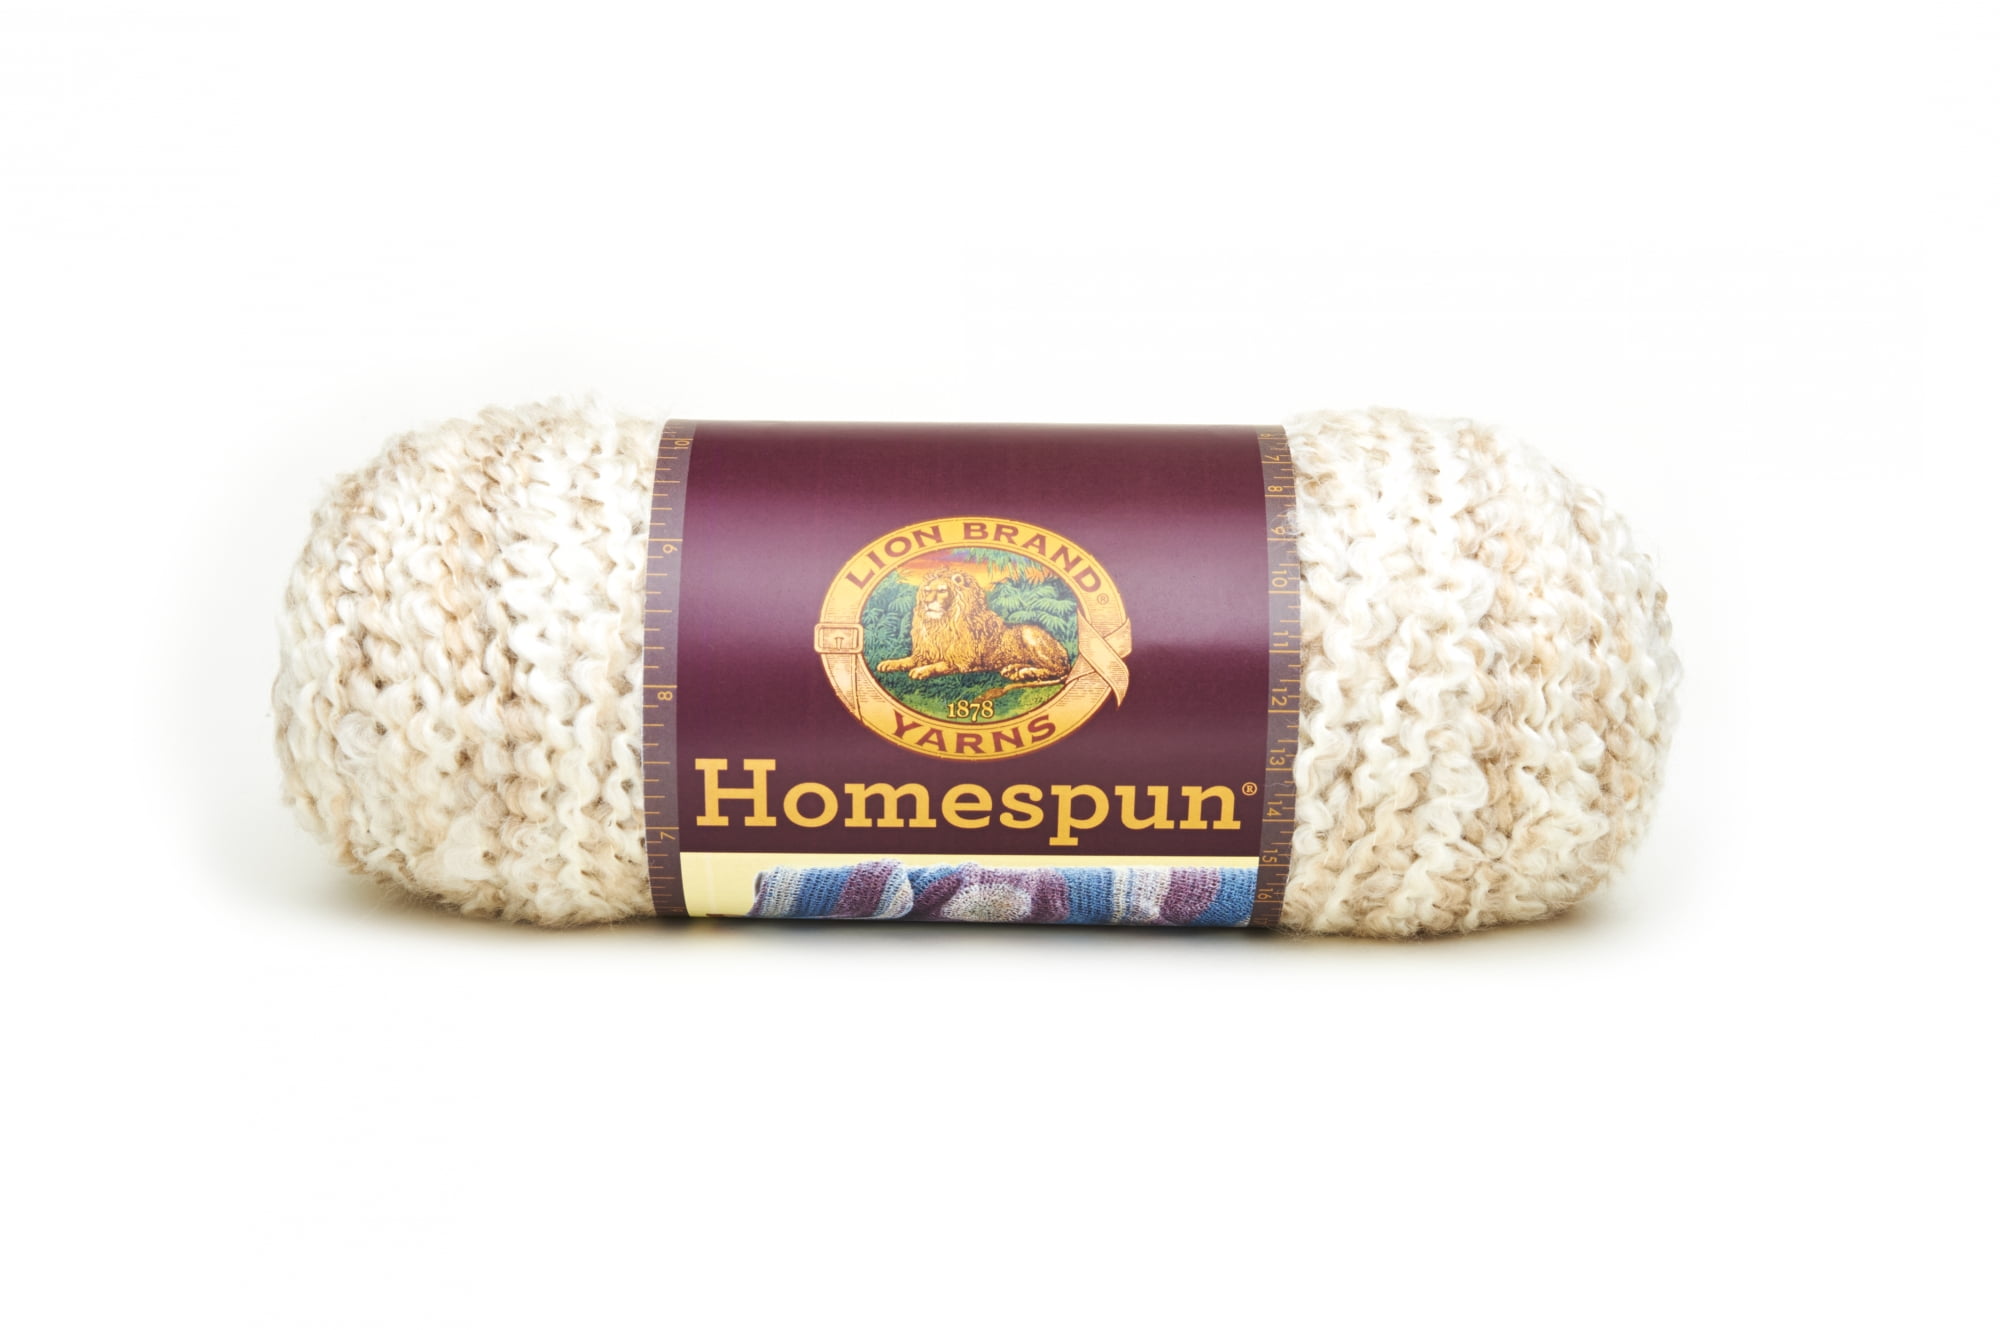 Homespun® Yarn: An Overlooked Classic